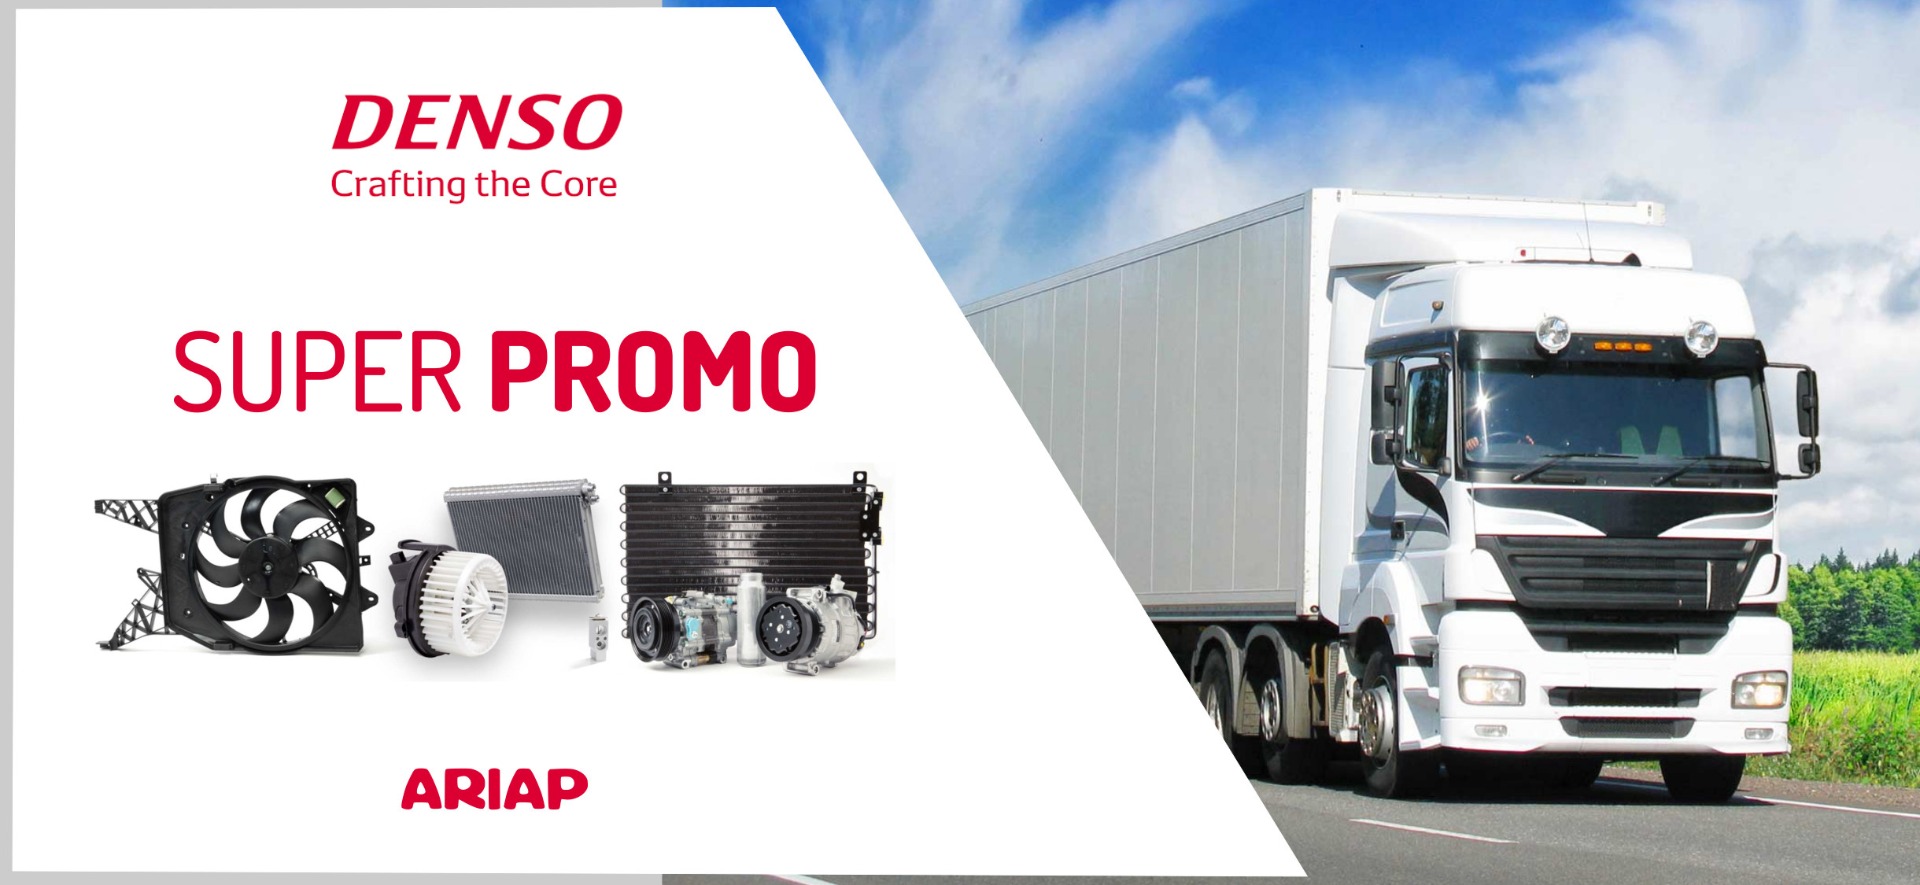 Promo ricambi Denso - Ariap ricambi trucks